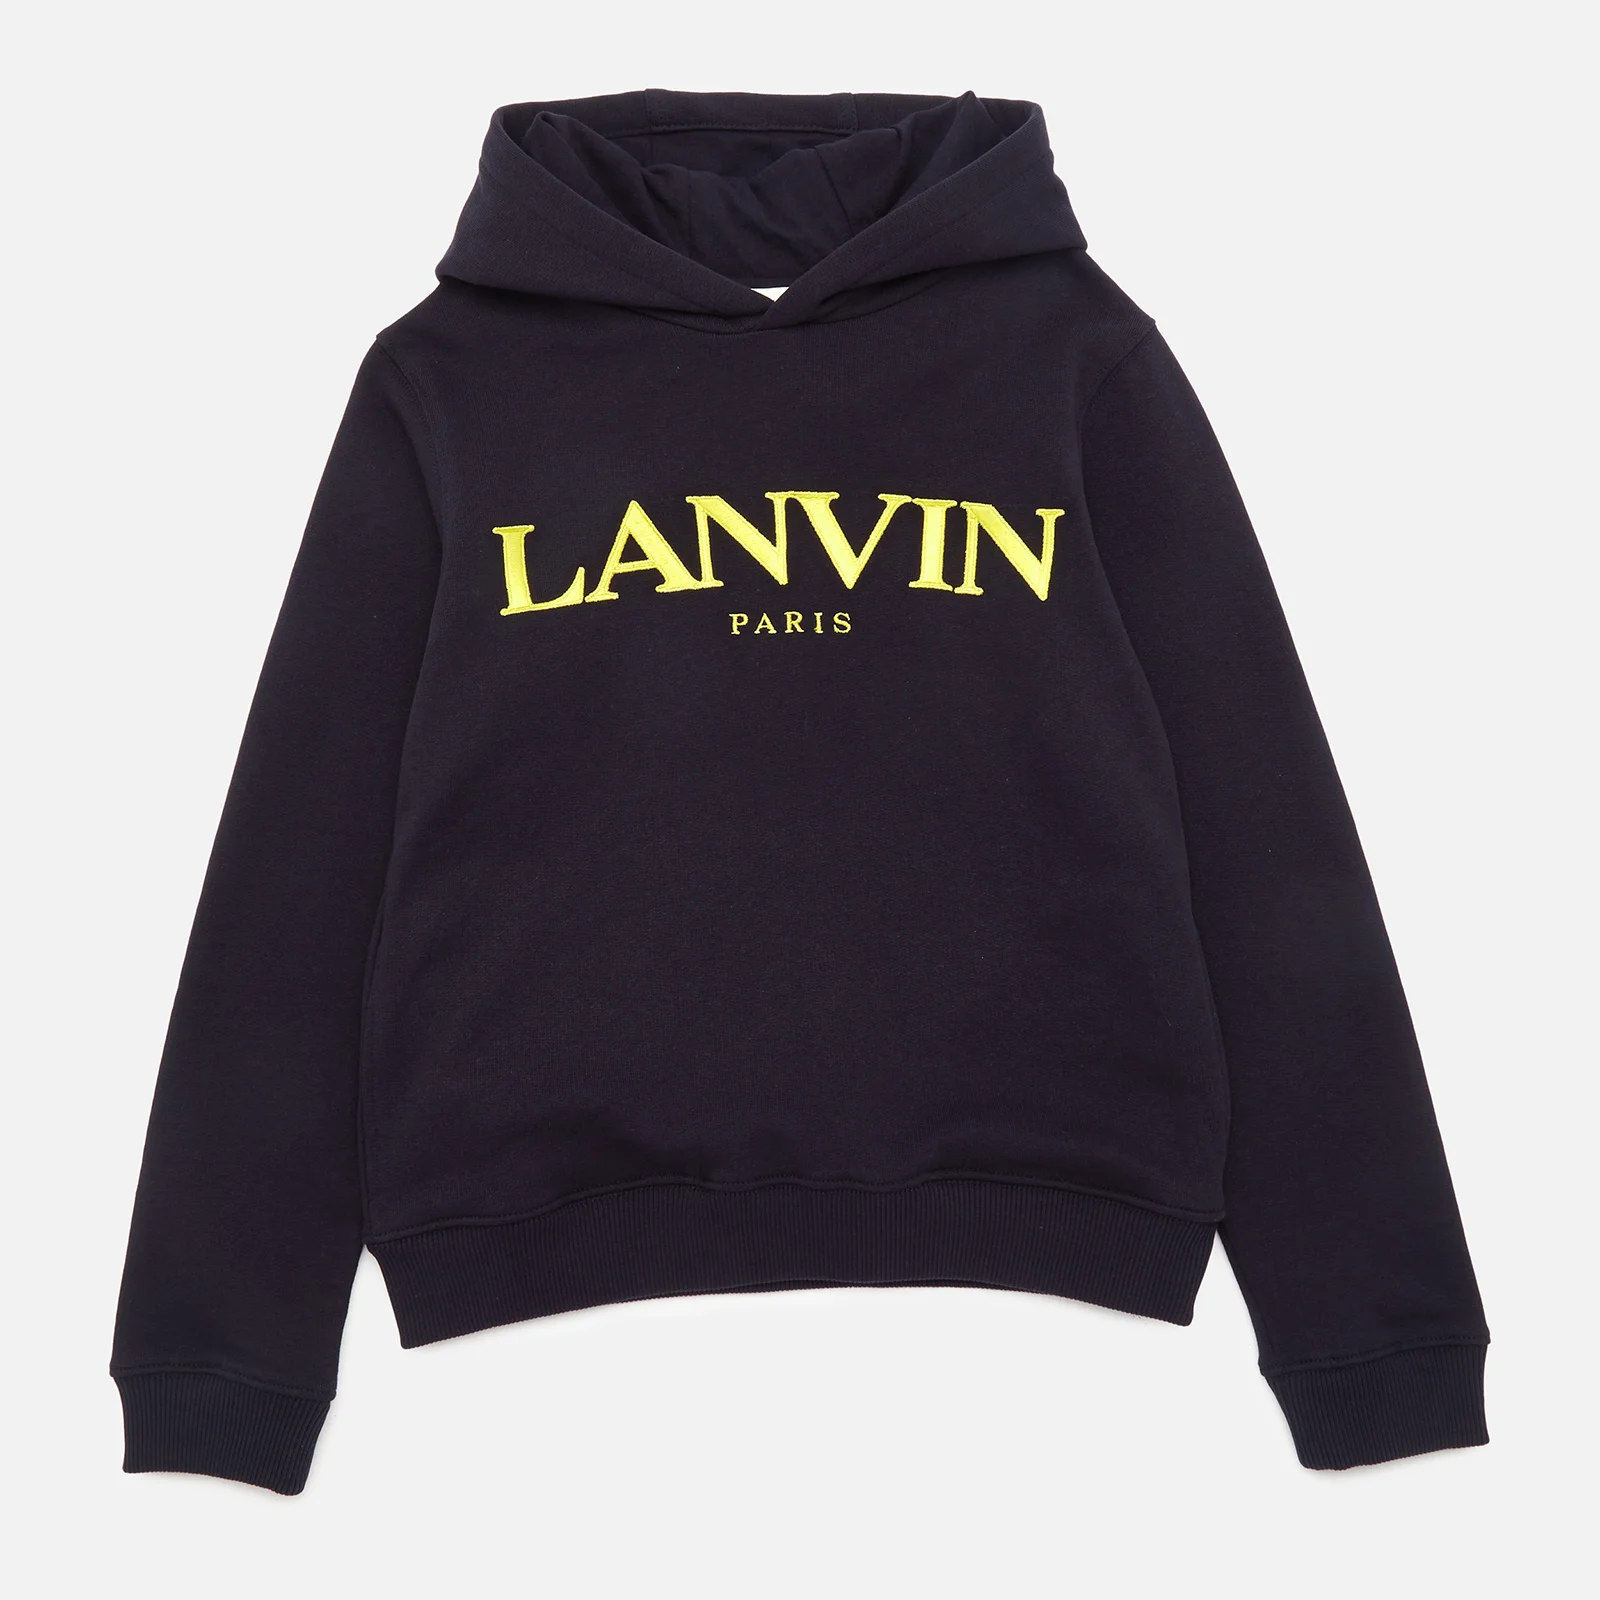 Lanvin Boys' Hooded Sweatshirt - Navy Image 1